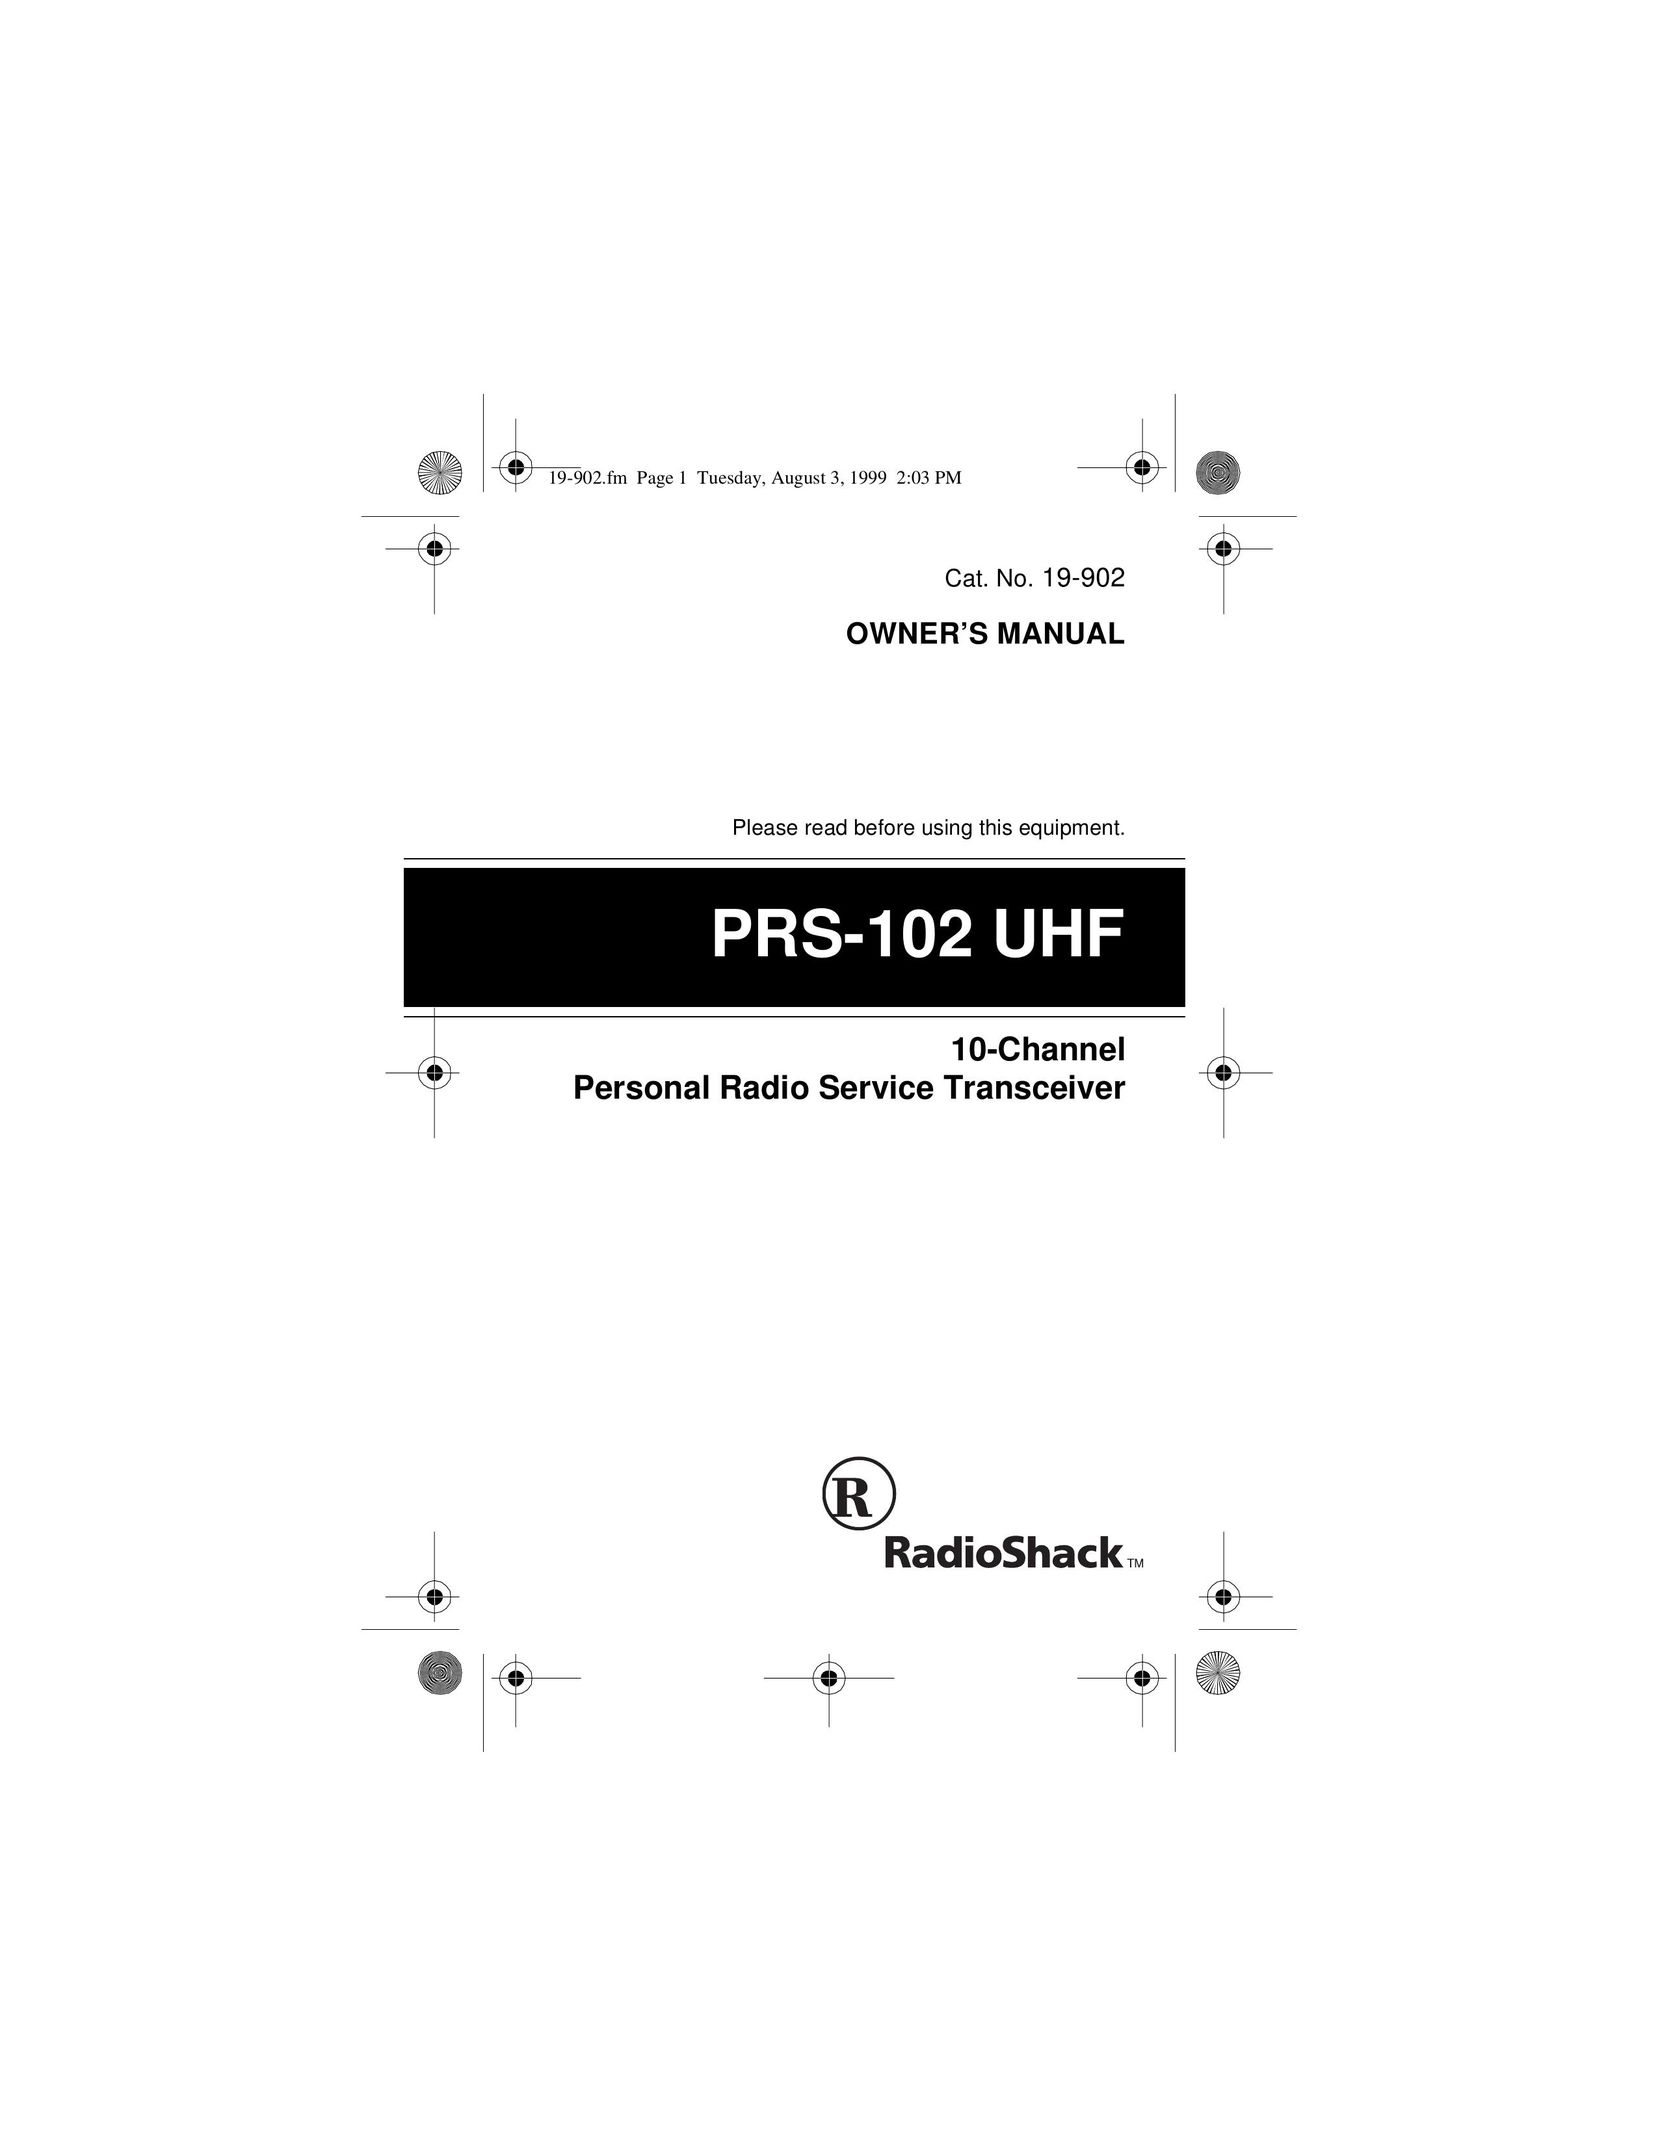 Radio Shack PRS-102 UHF Portable Radio User Manual